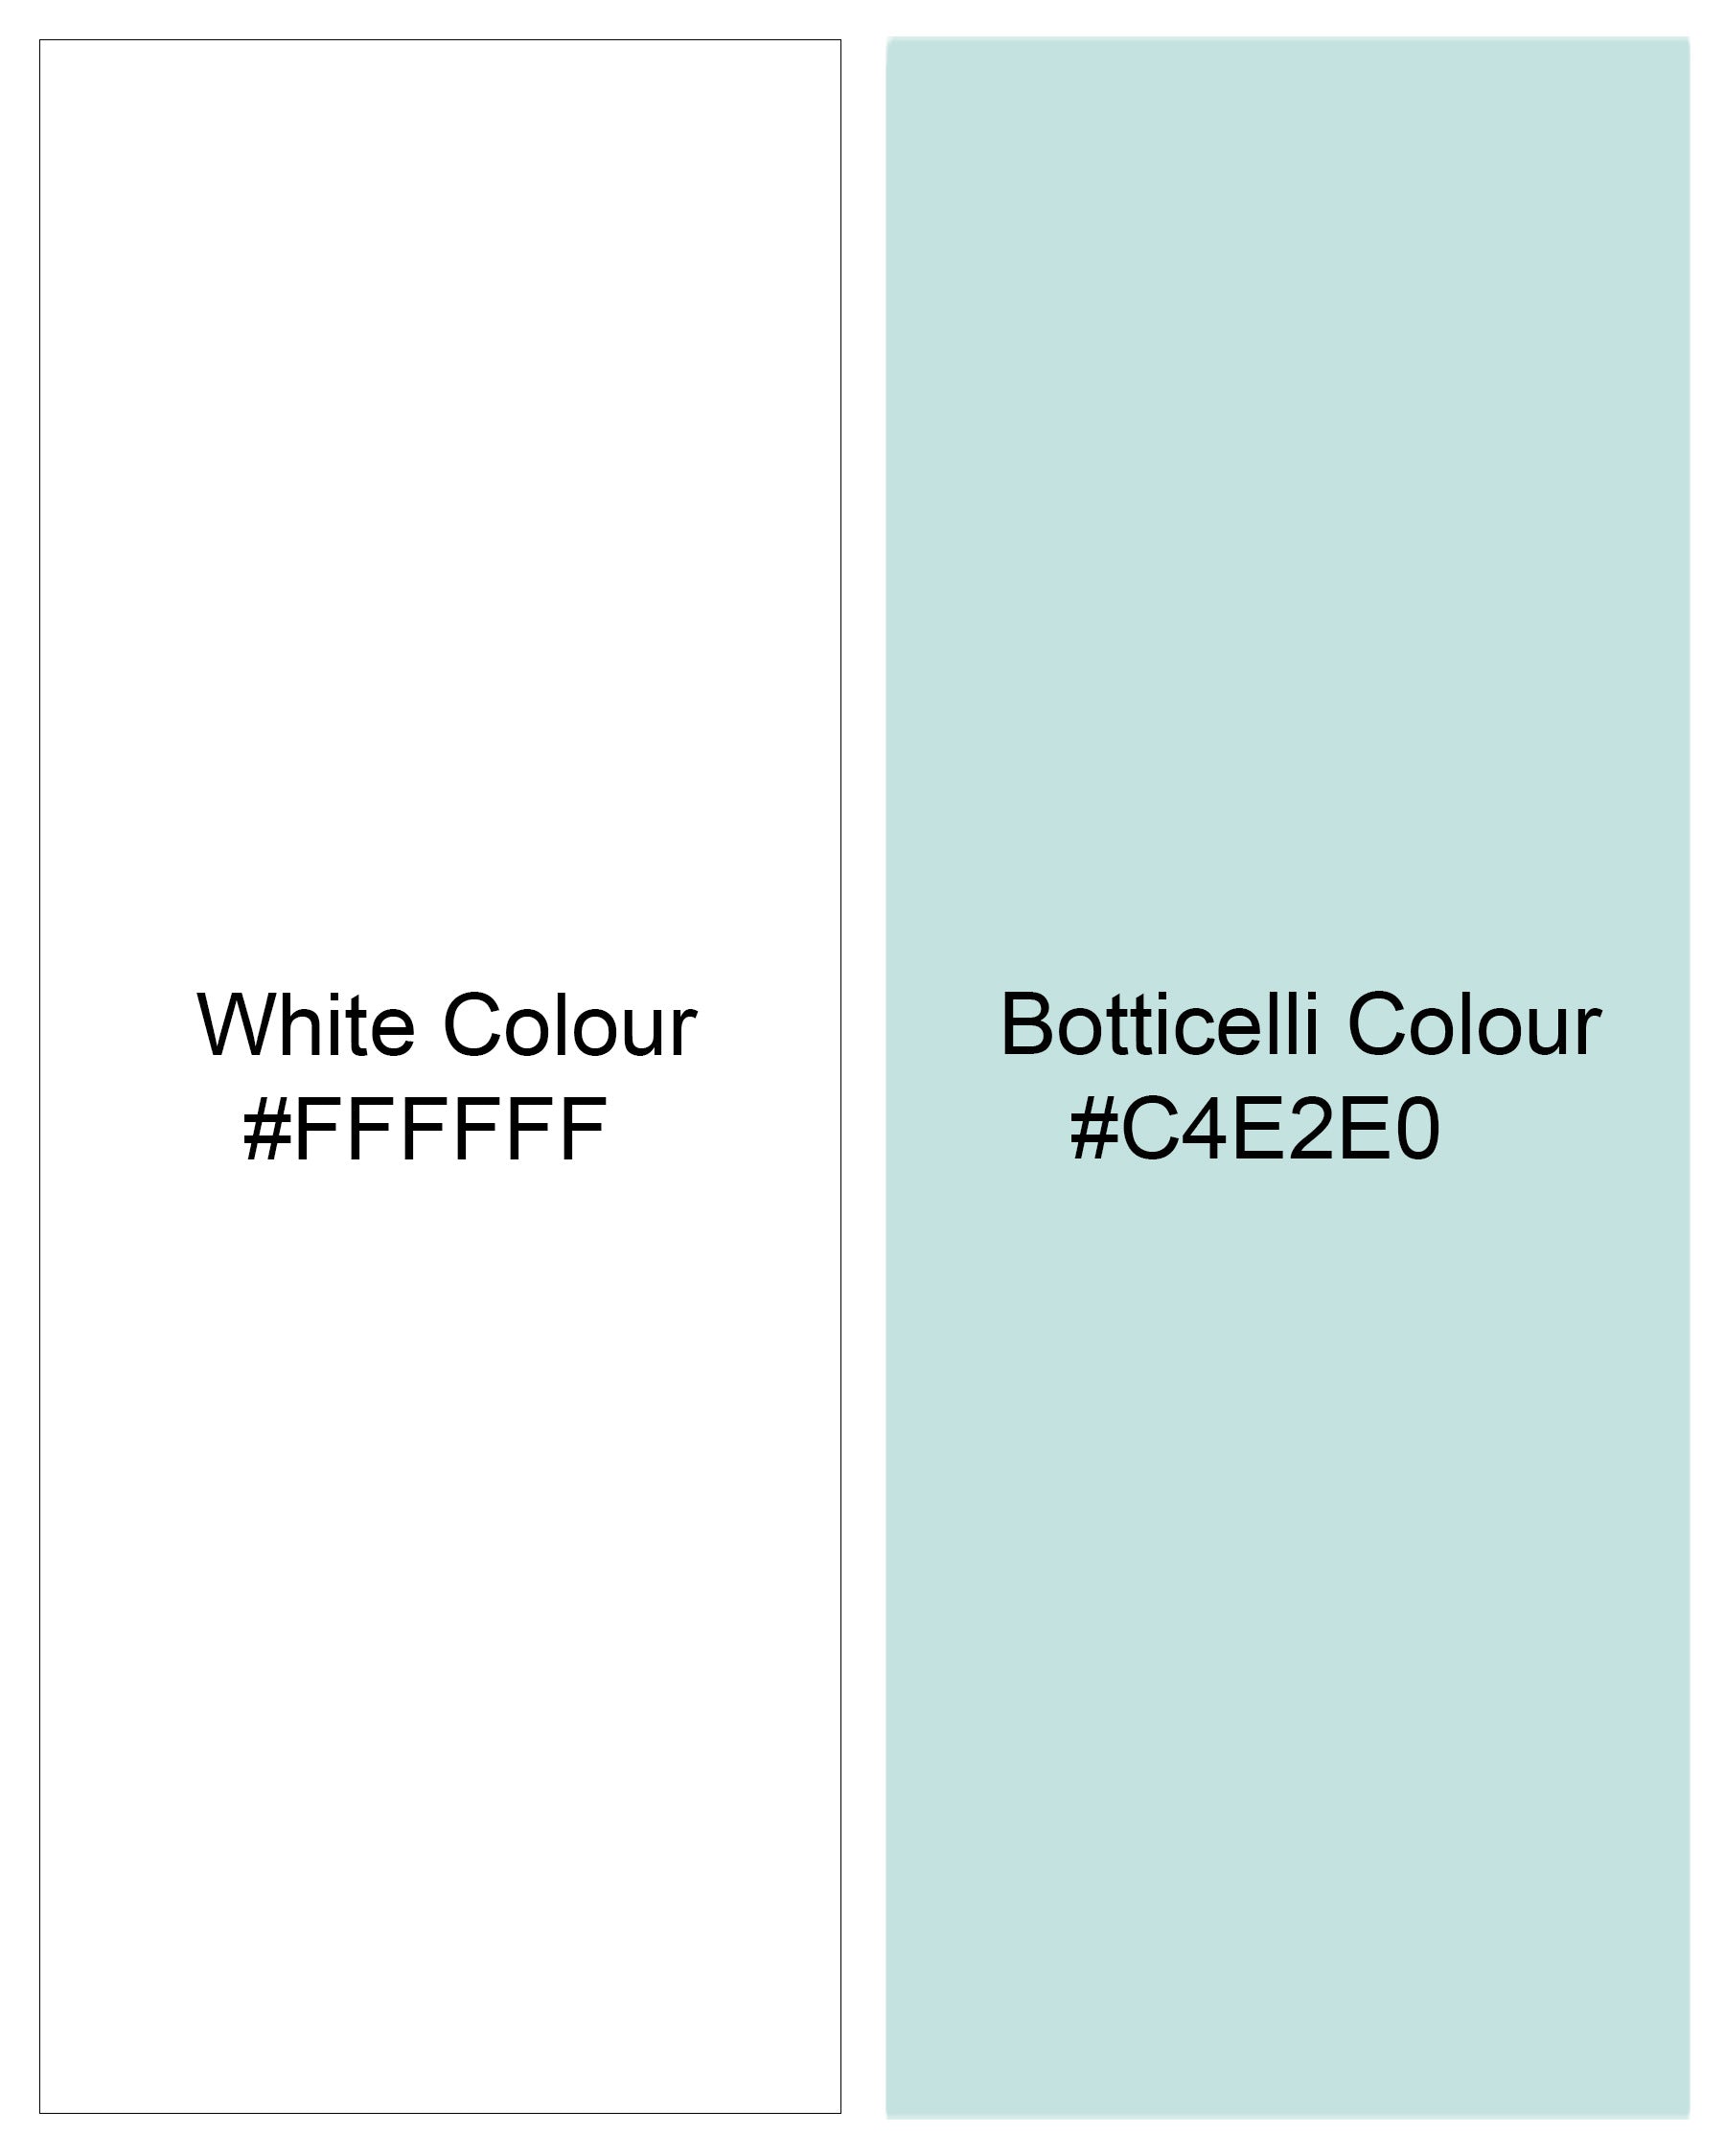 Botticelli Sea Blue with White Patch Design Organic Cotton Pique Polo TS599-S, TS599-M, TS599-L, TS599-XL, TS599-XXL, TS599-3XL, TS599-4XL